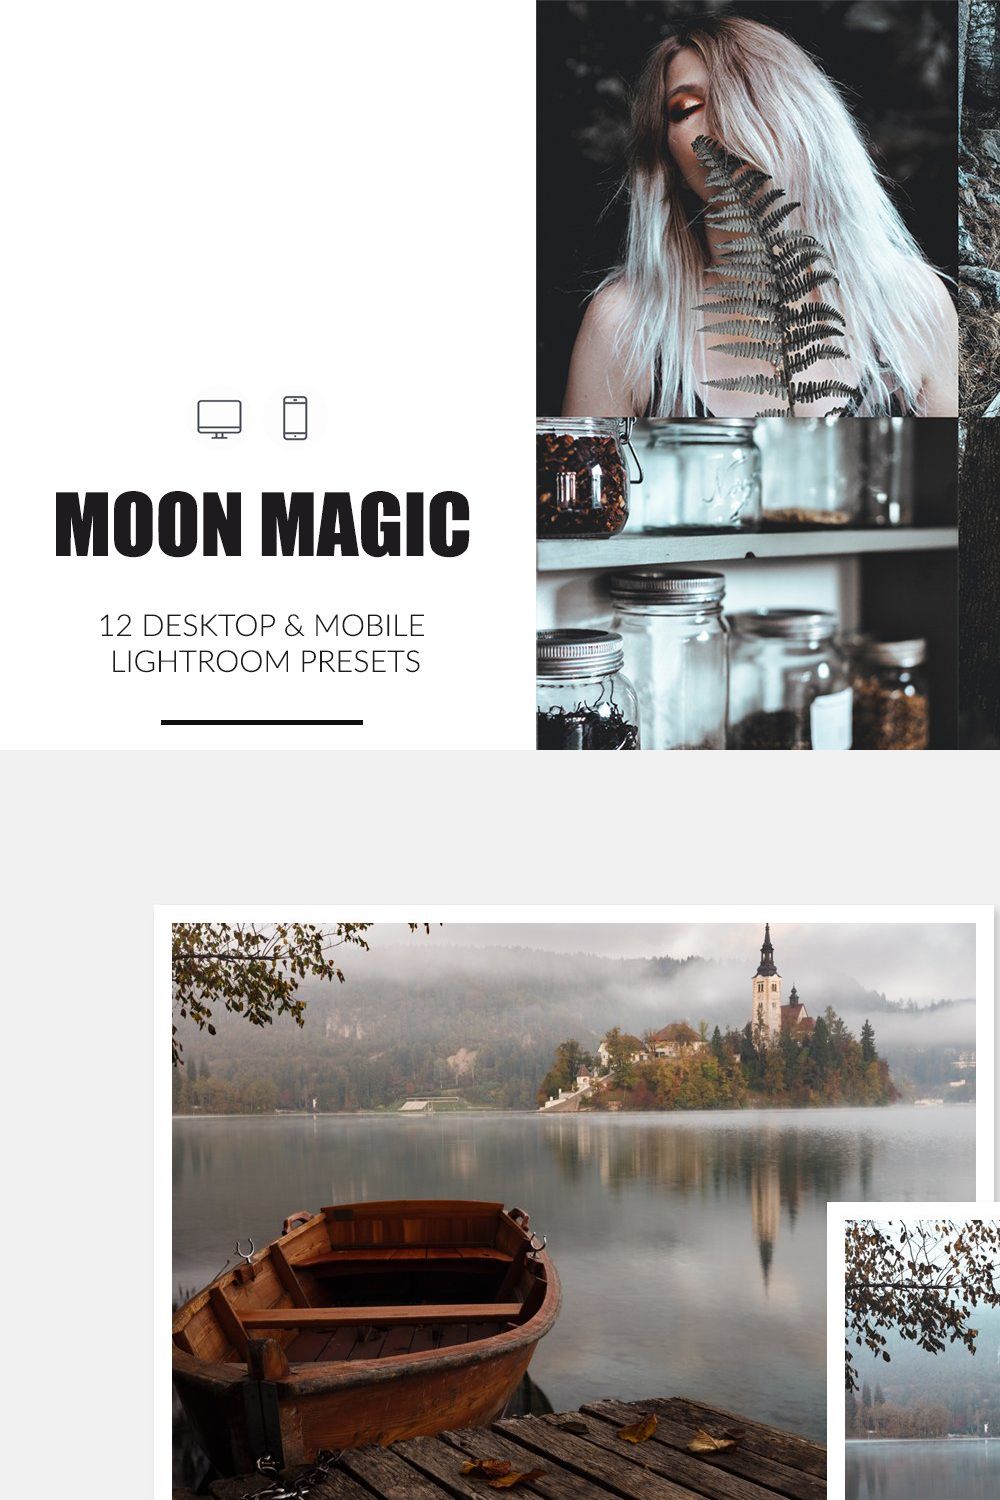 Moon Magic Lightroom Presets pinterest preview image.